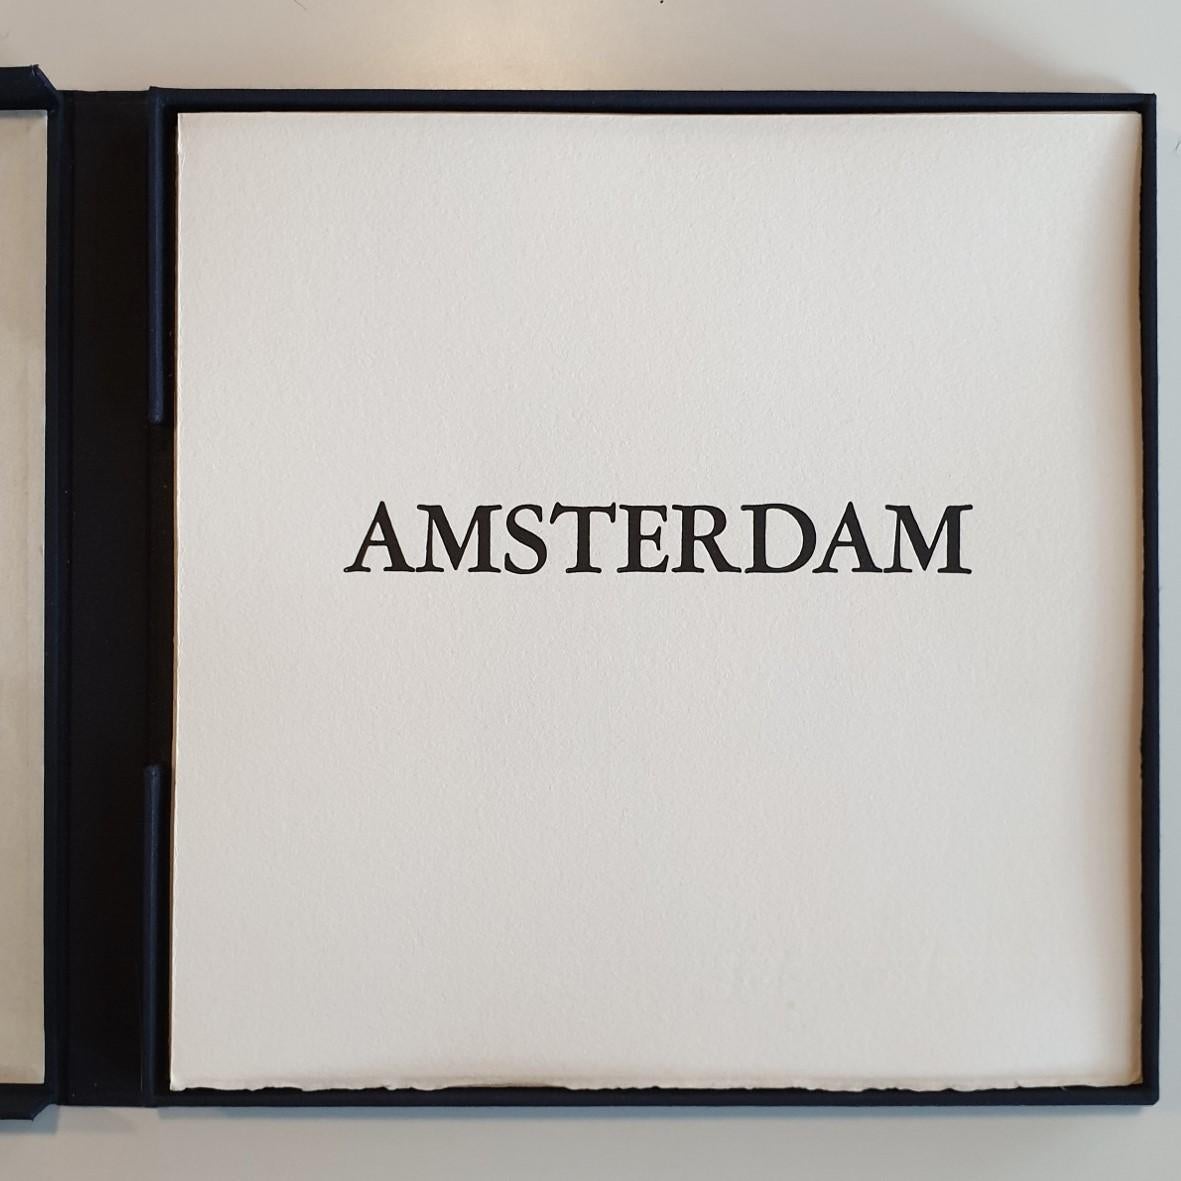 Amsterdam V ed 27/50 - museum glass framed black-white aquatint etch print For Sale 1